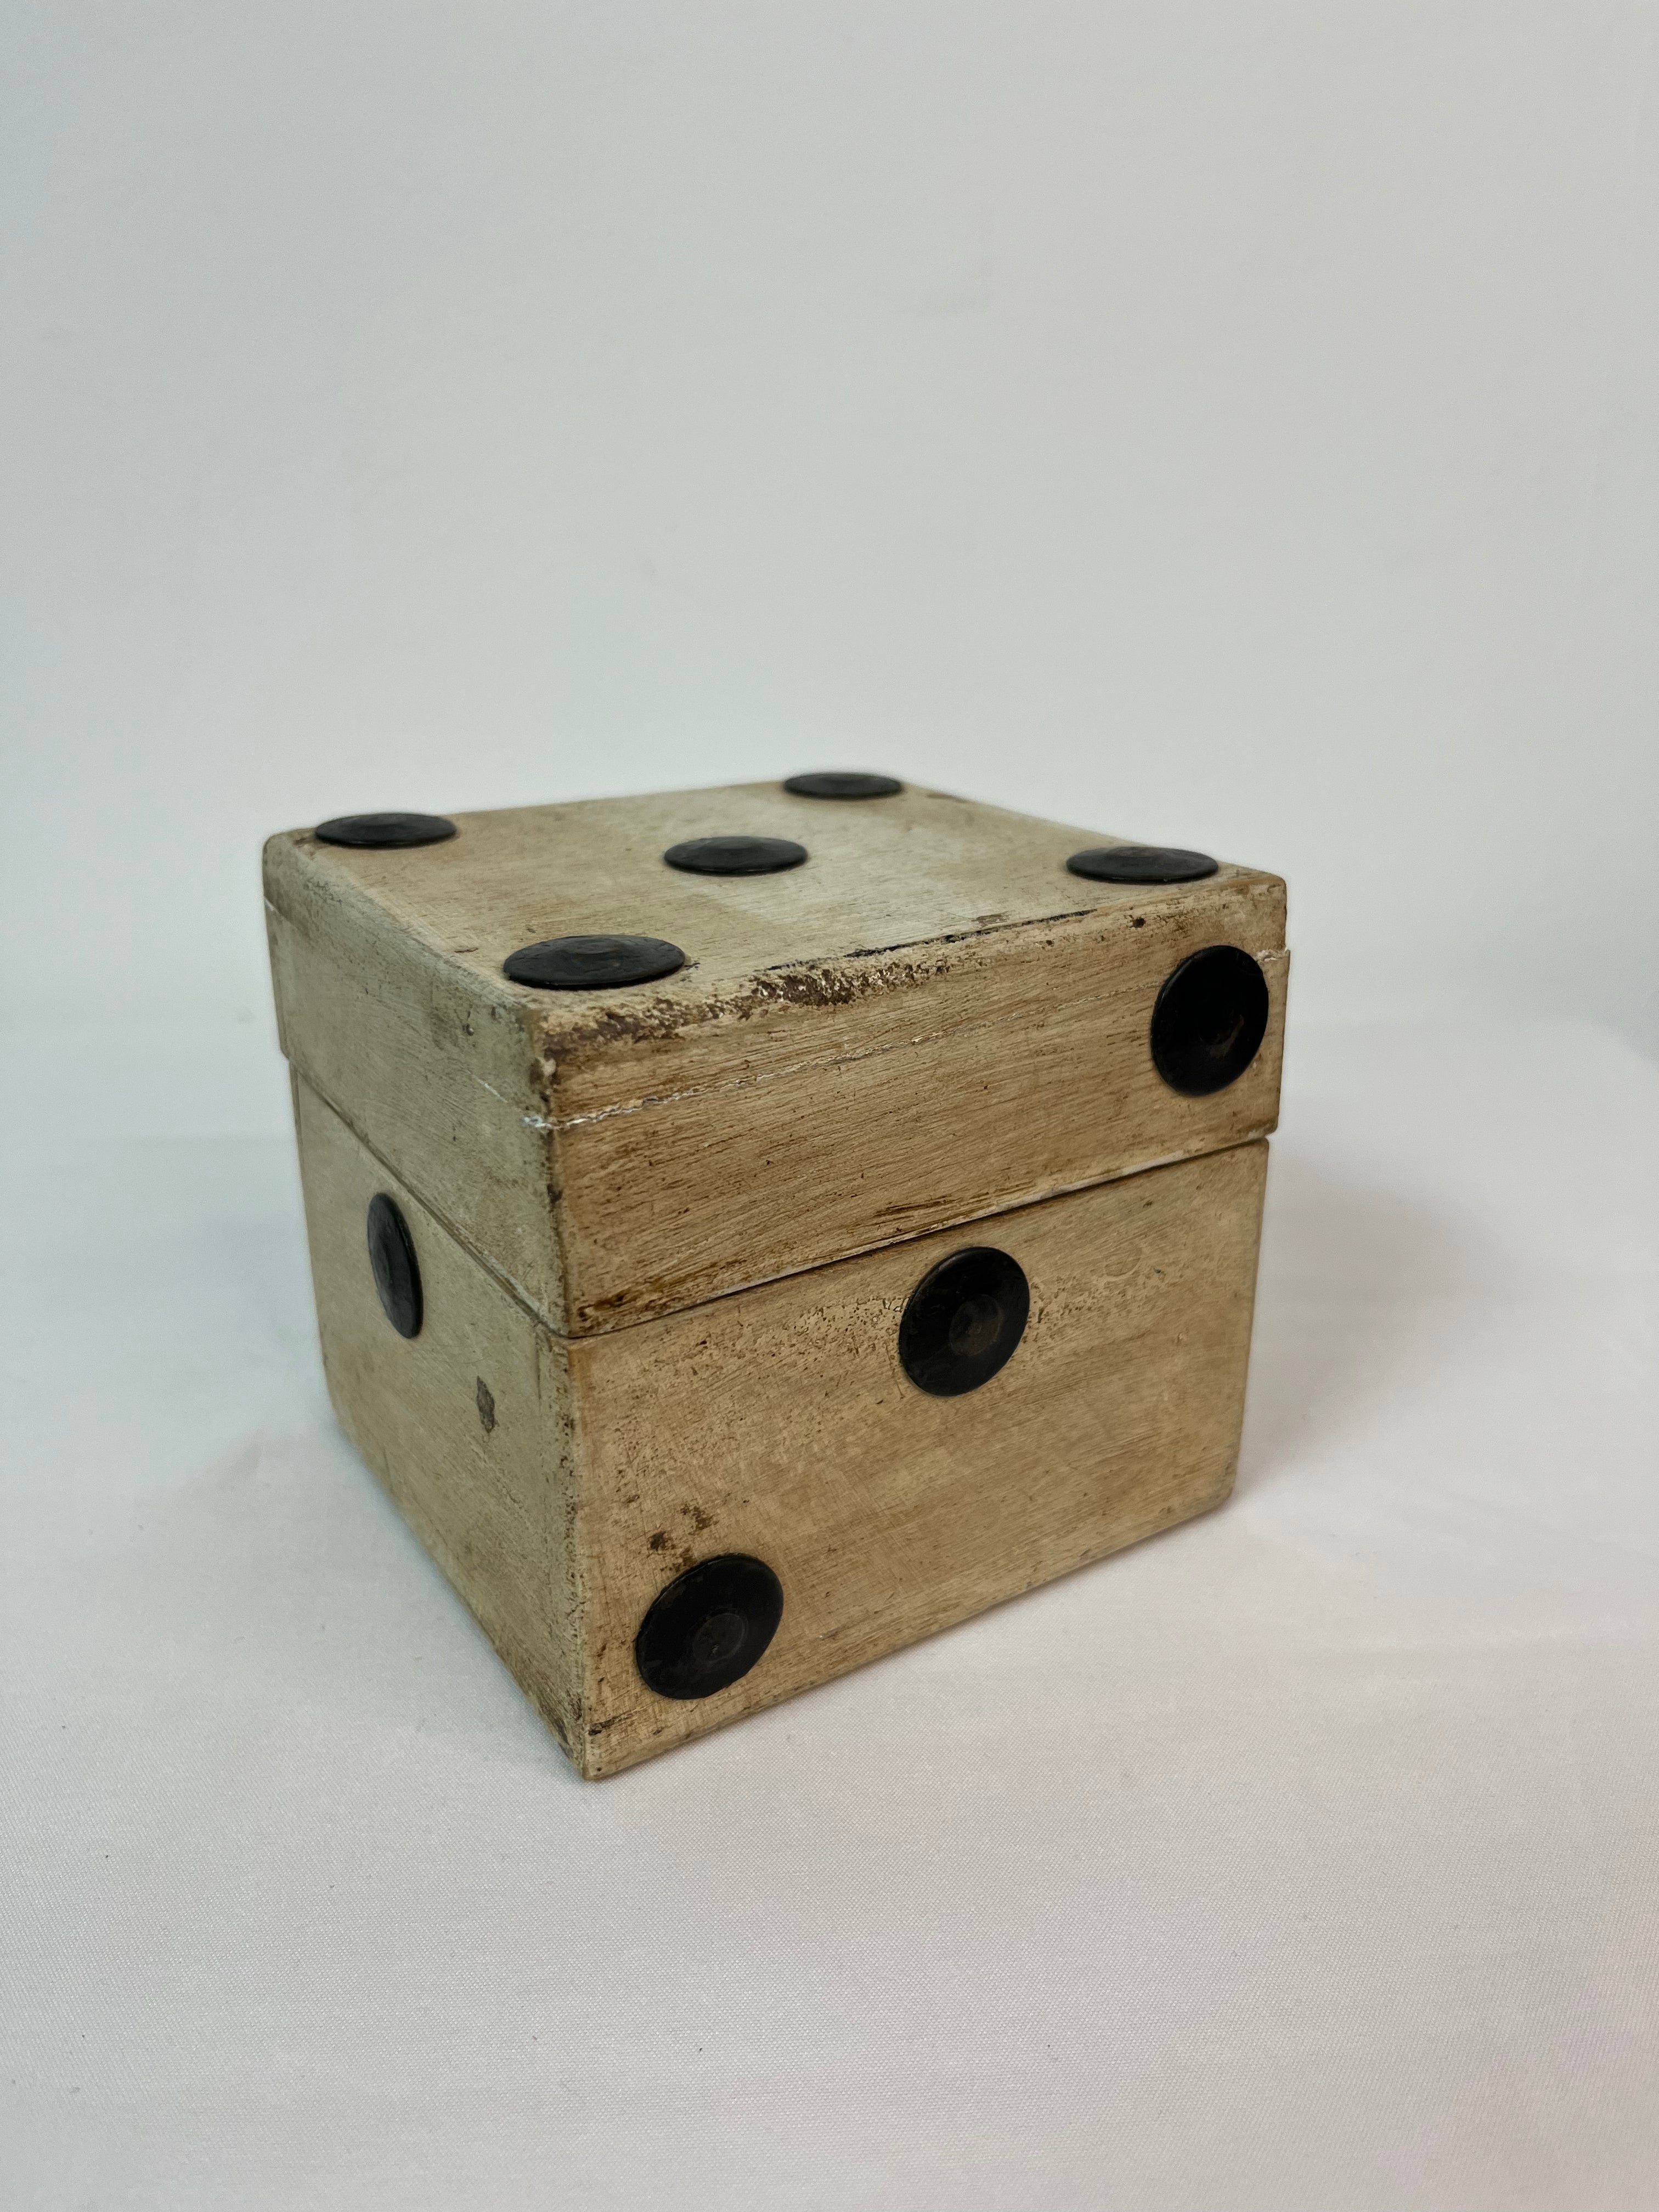 1960s/70s Dice (Die) Wood with Metal Applique Hand Made Folk Art Trinket Box